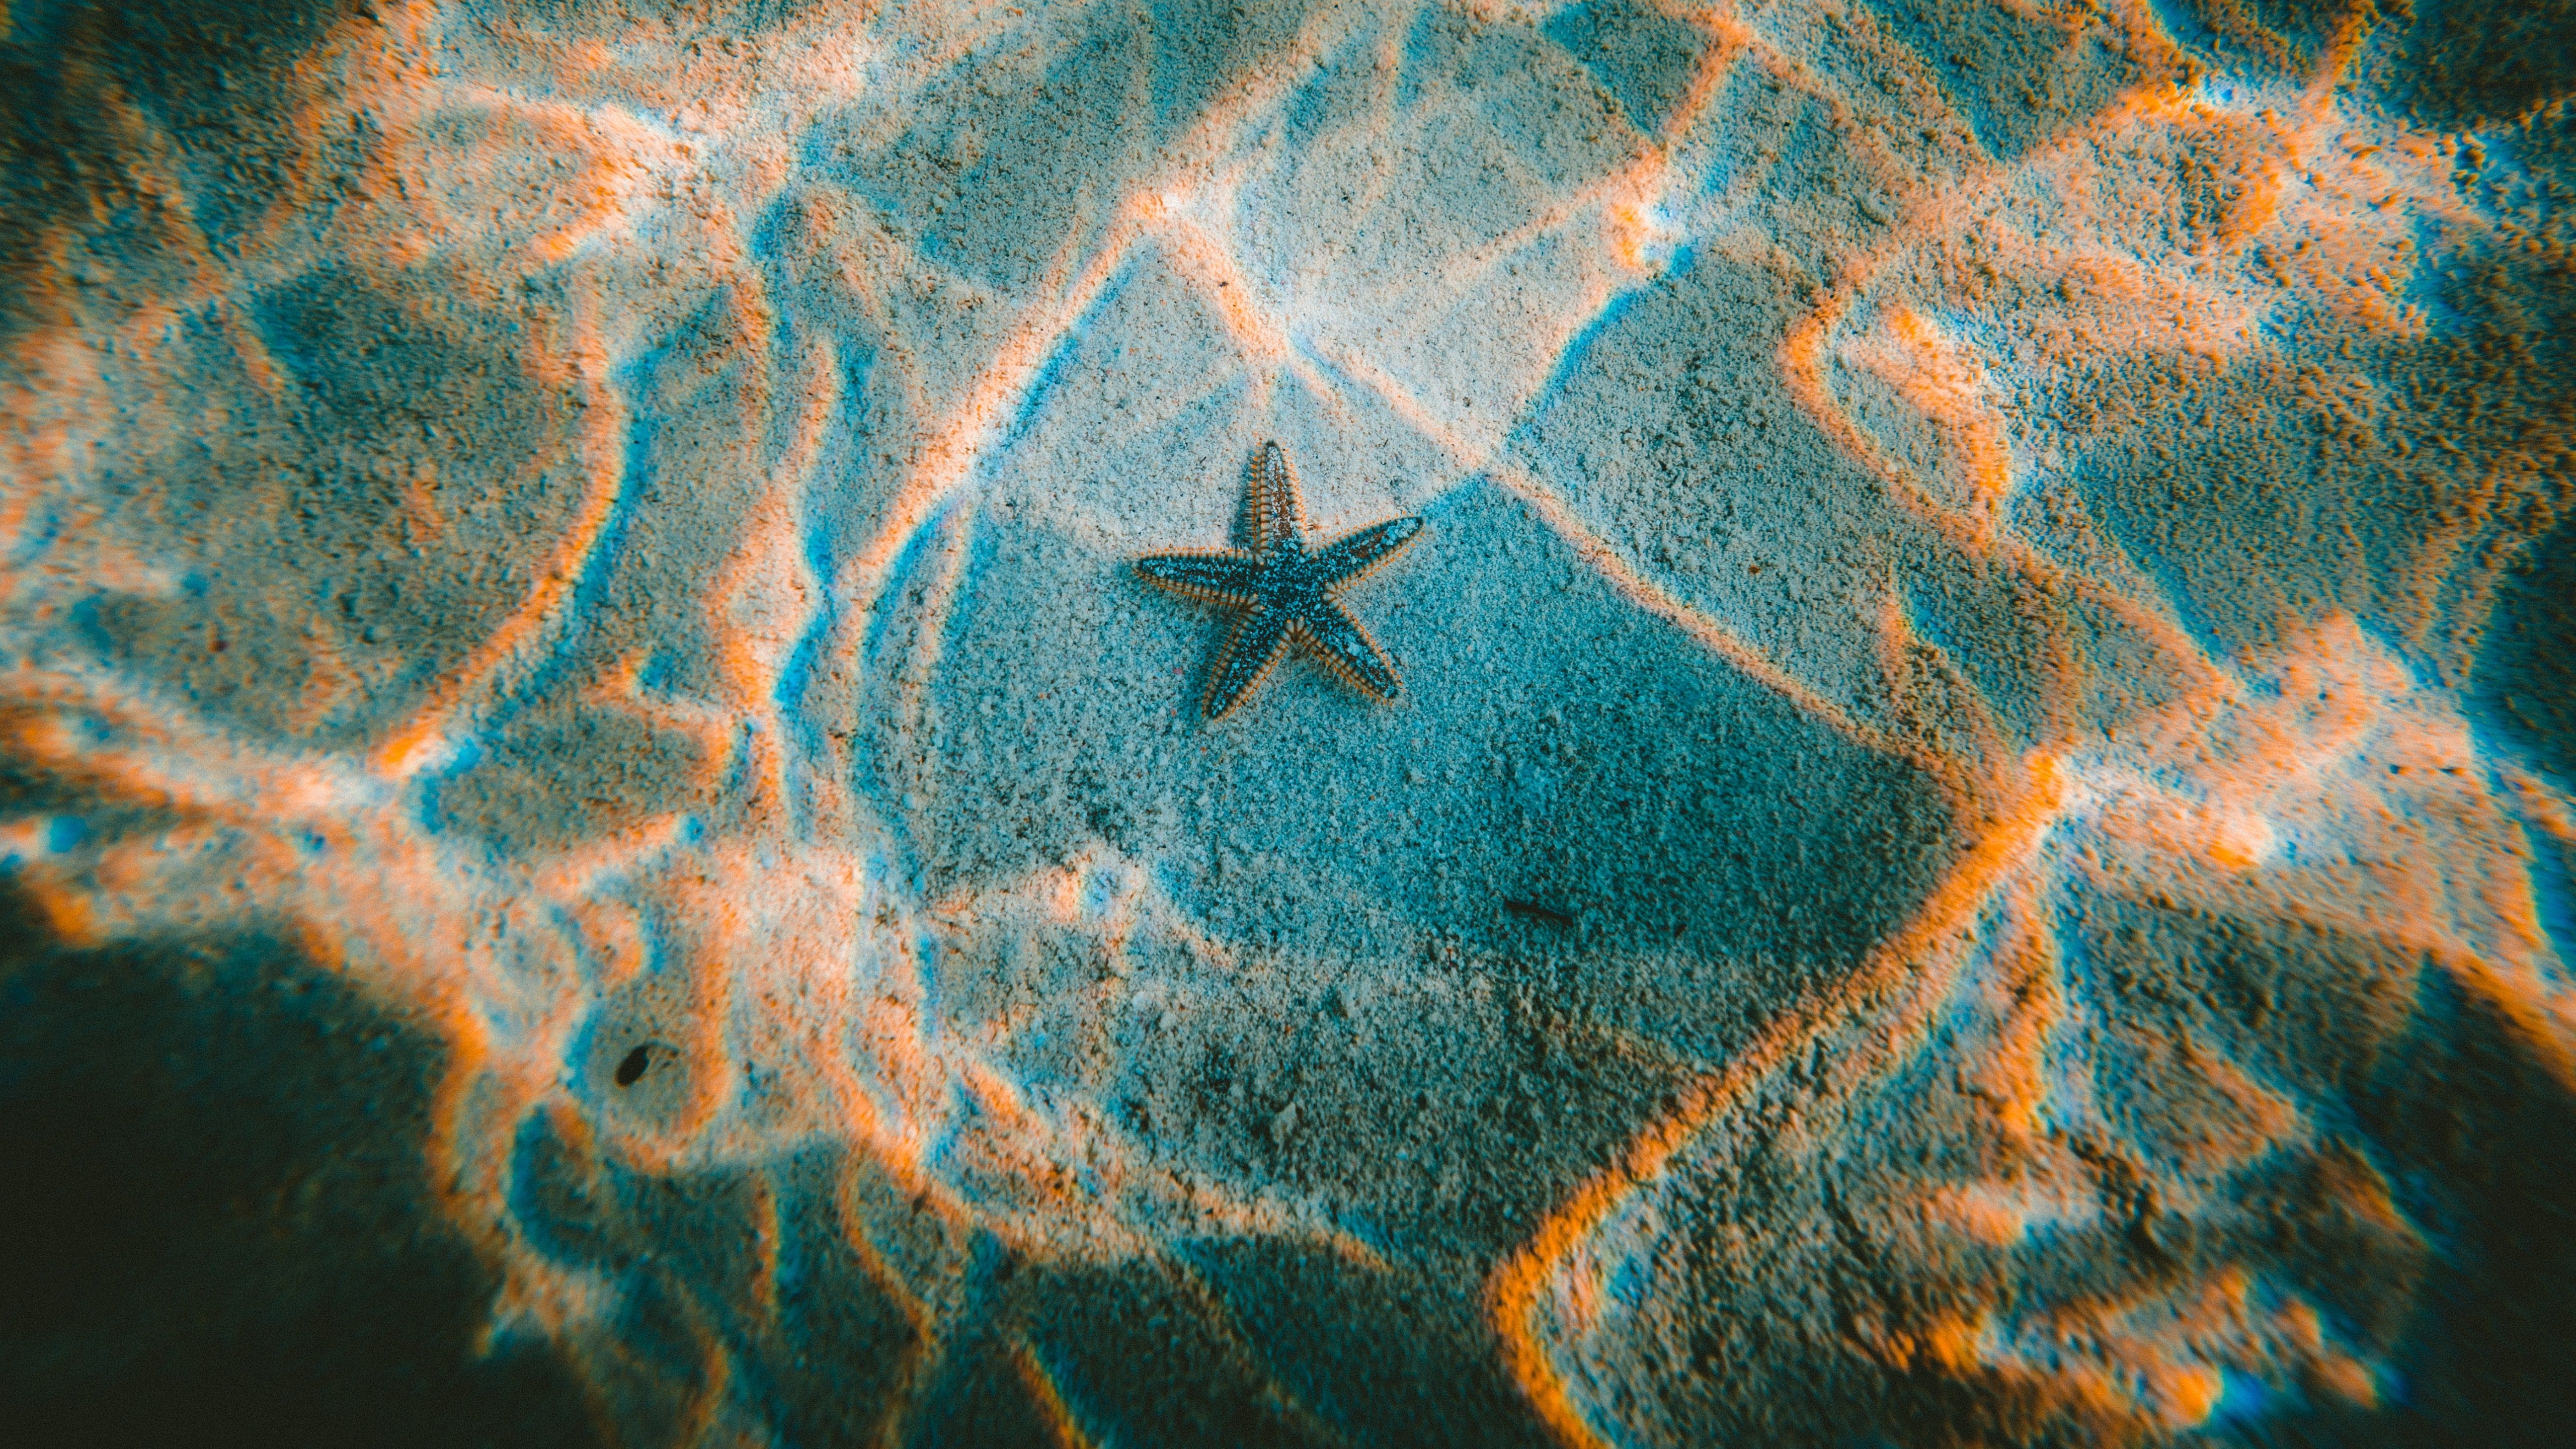 Underwater as Seen through Sunlight